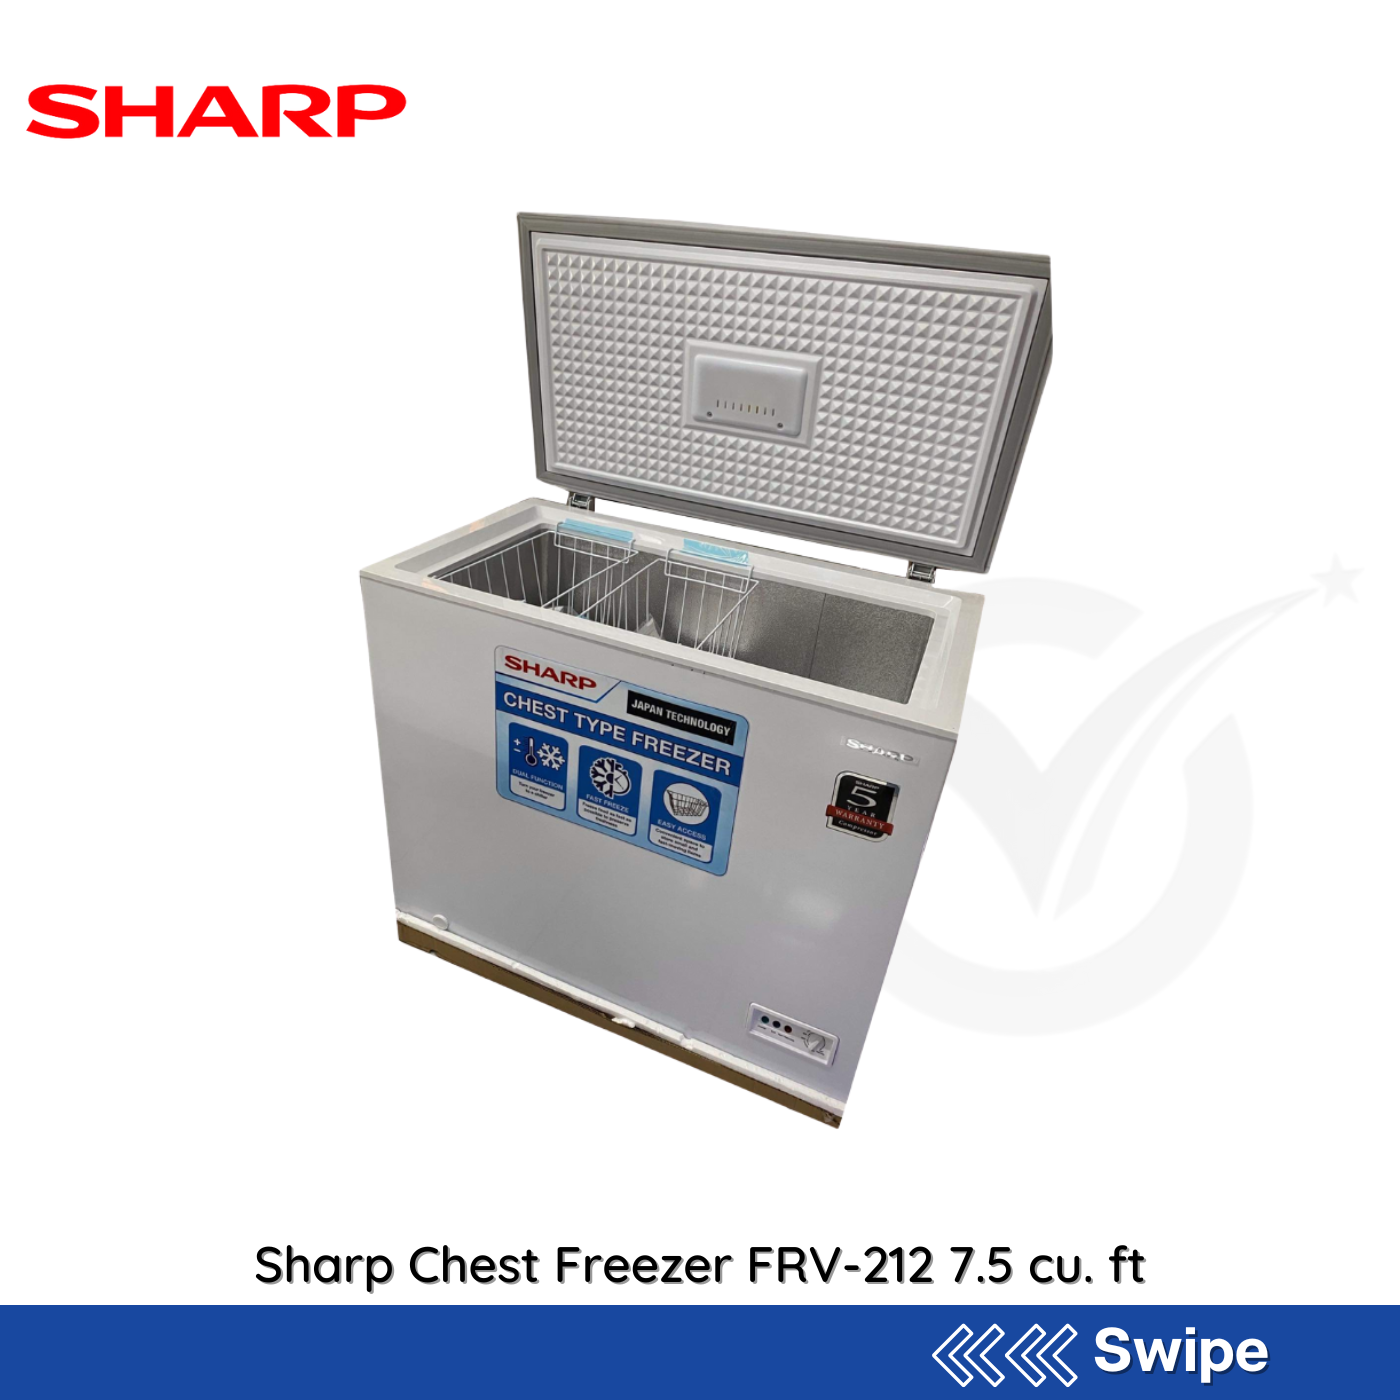 Sharp Chest Freezer FRV-212 7.5 cu. ft - People's Choice Marketing